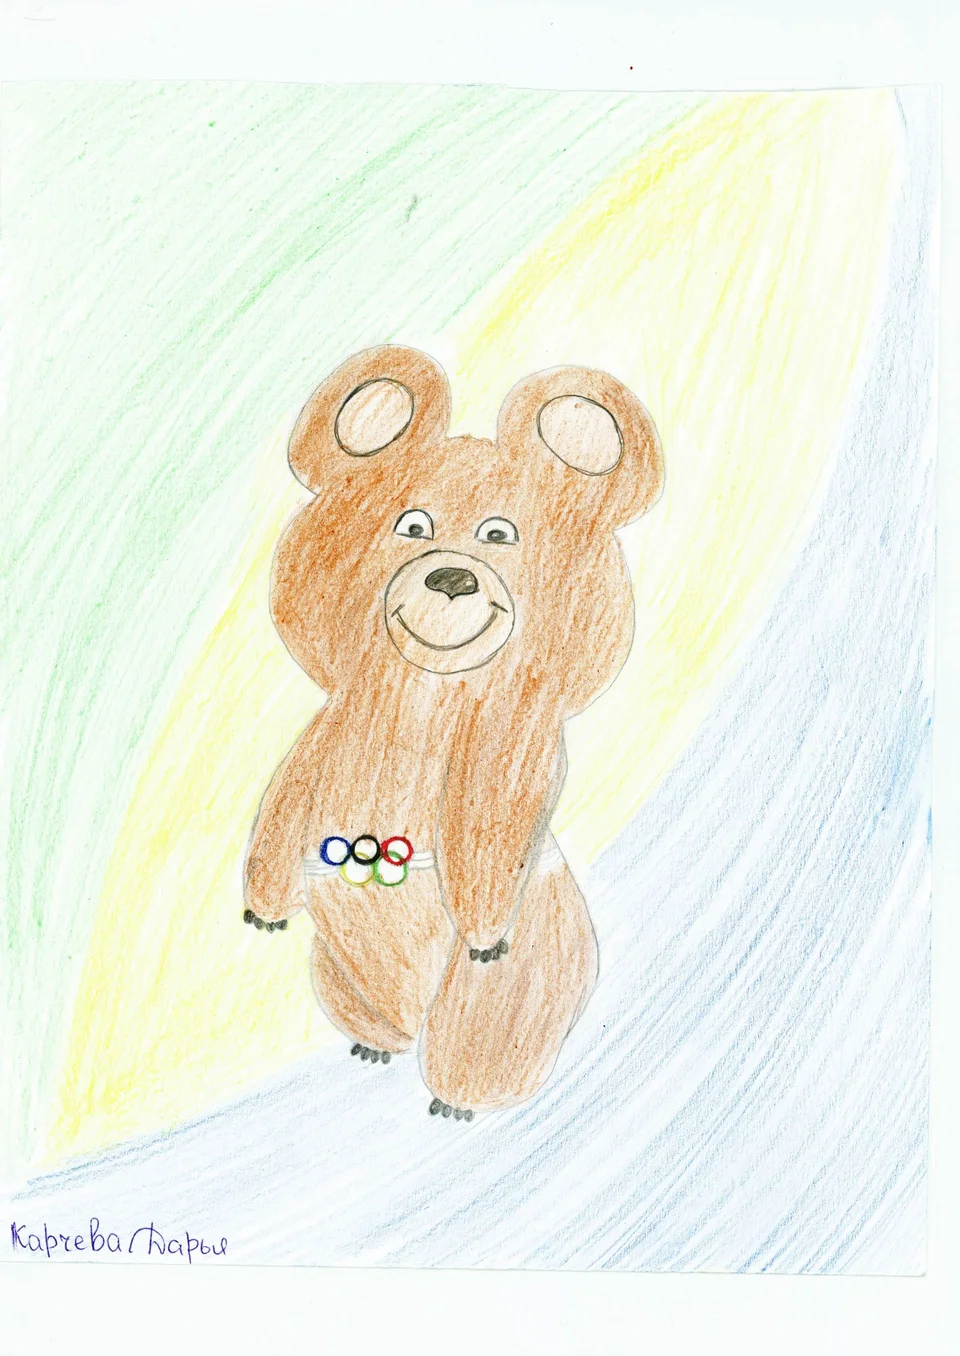 Олимпийский мишка рисунок карандашом